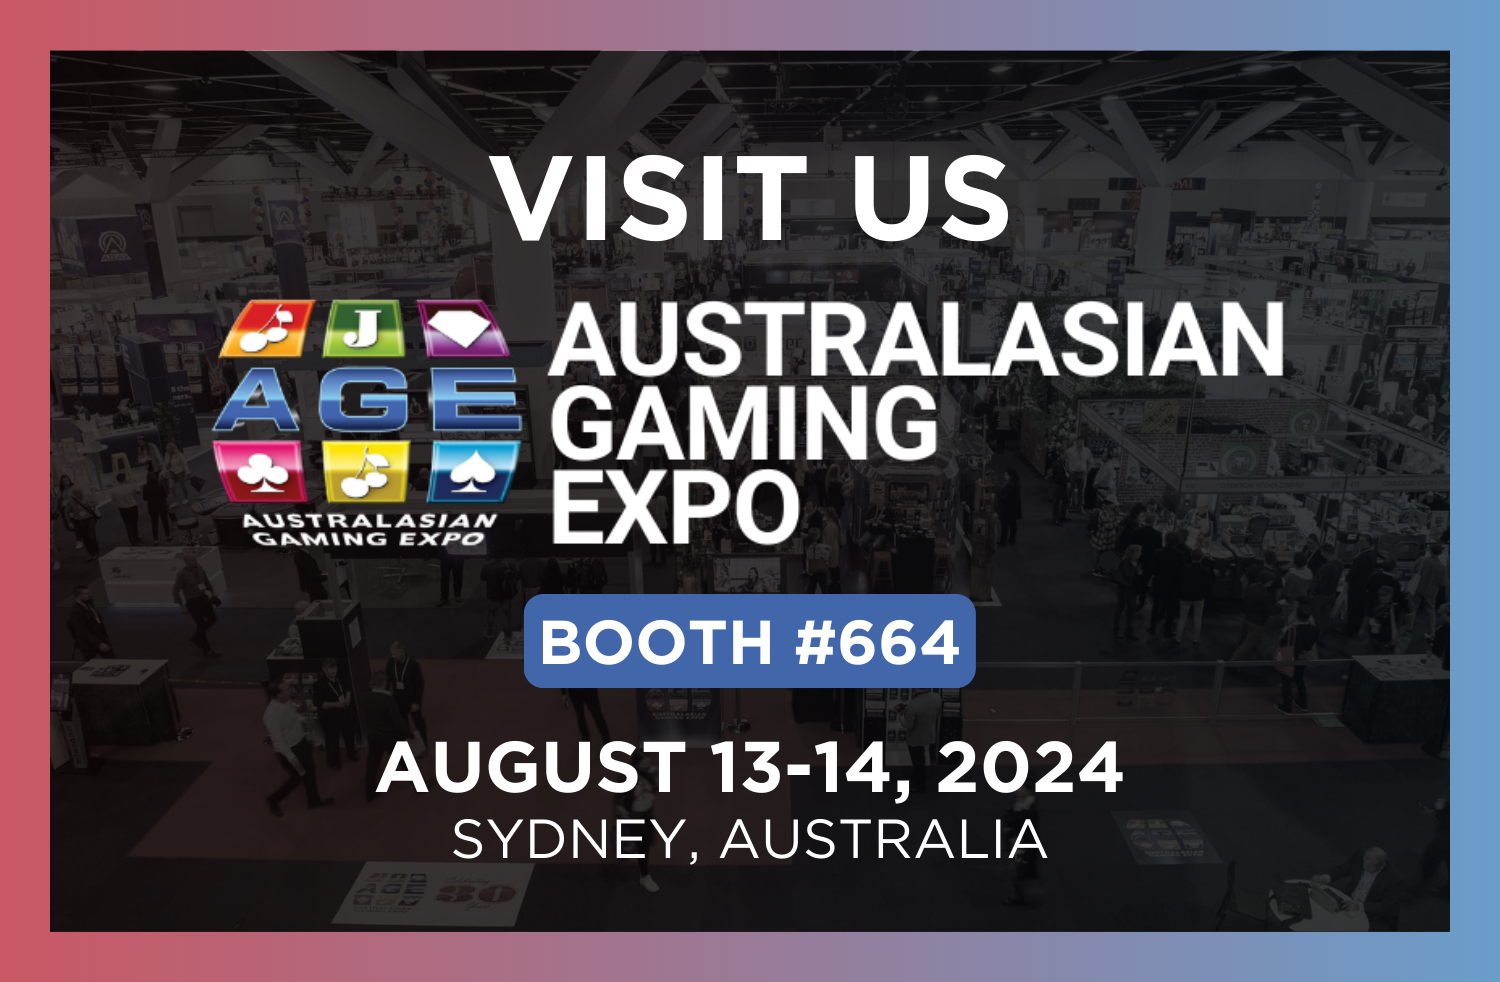 Australasian Gaming Expo (AGE)